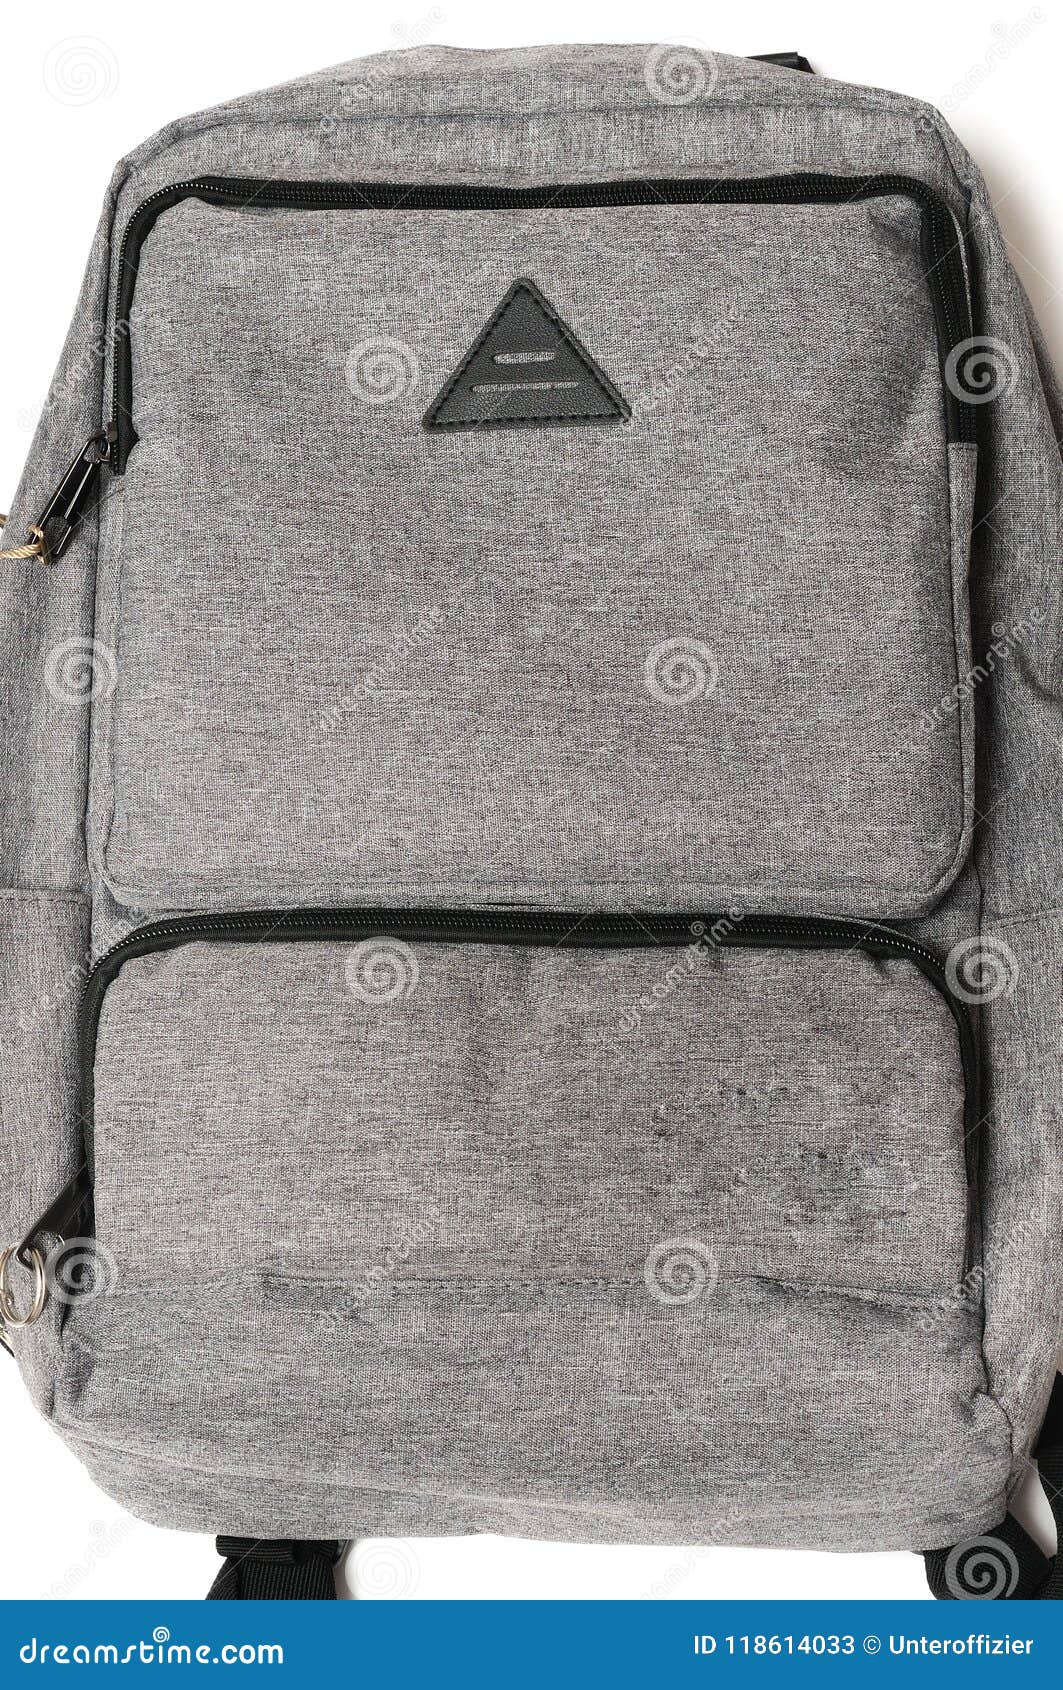 a grey haversack backpack closeup photo